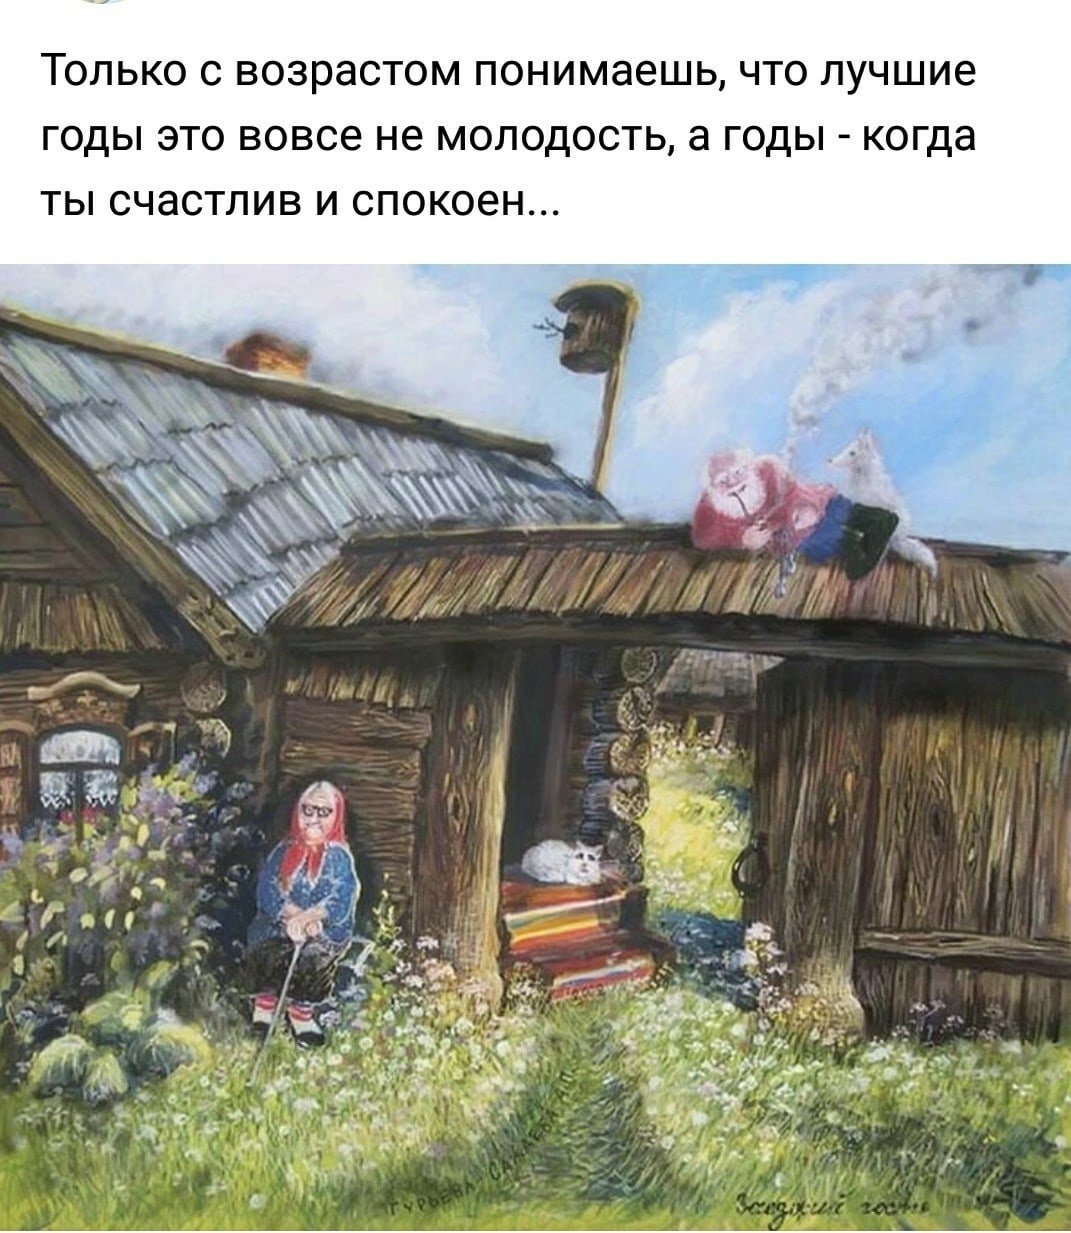 Сына хата. Художник а. Гурьева-Сажаева.